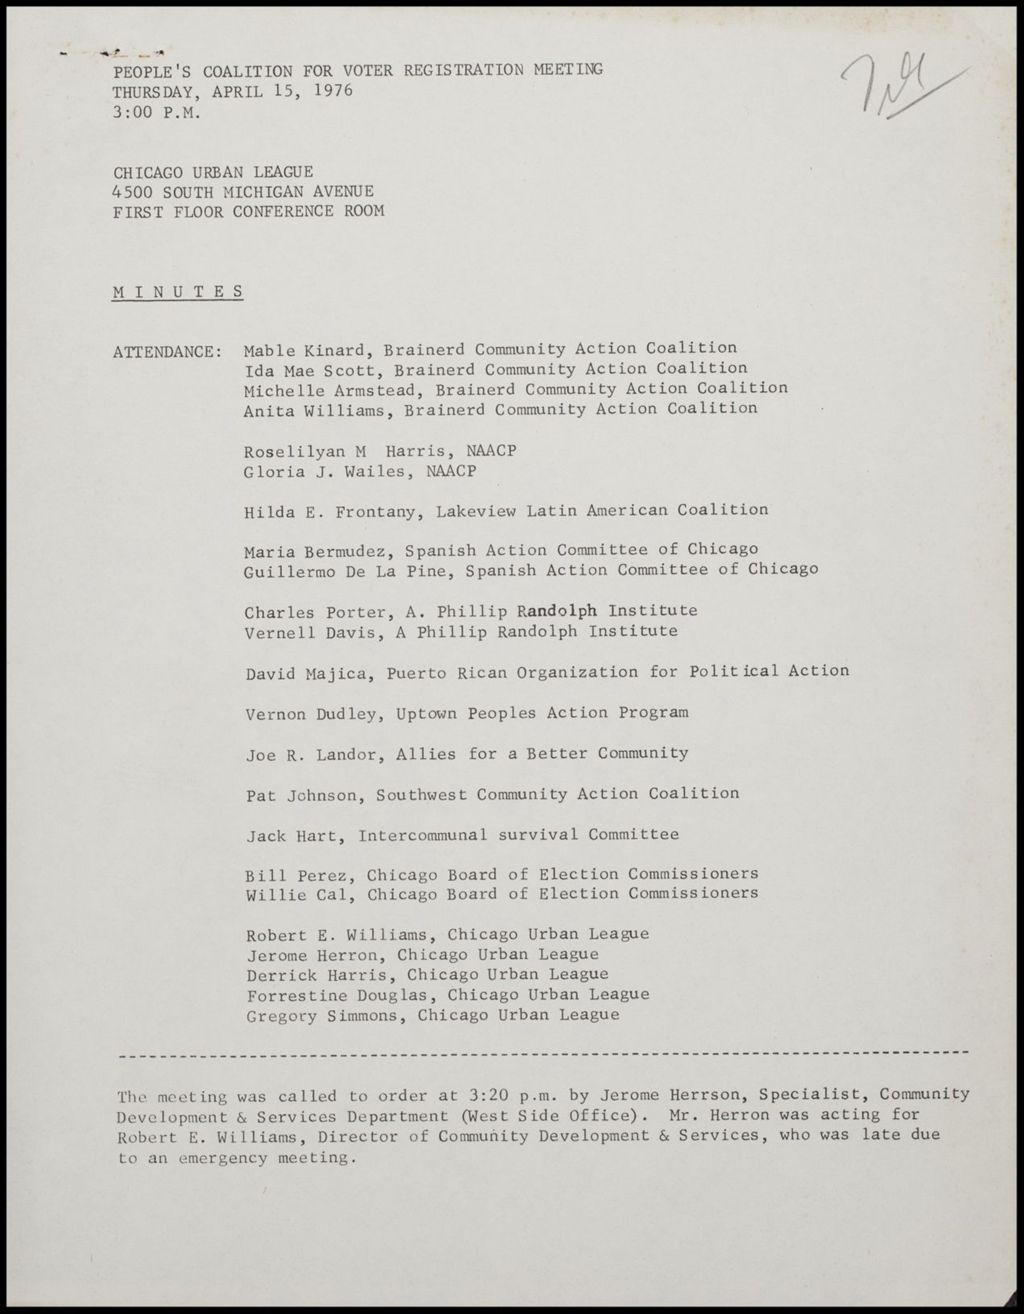 Miscellaneous Documents, 1976 (Folder II-2137)